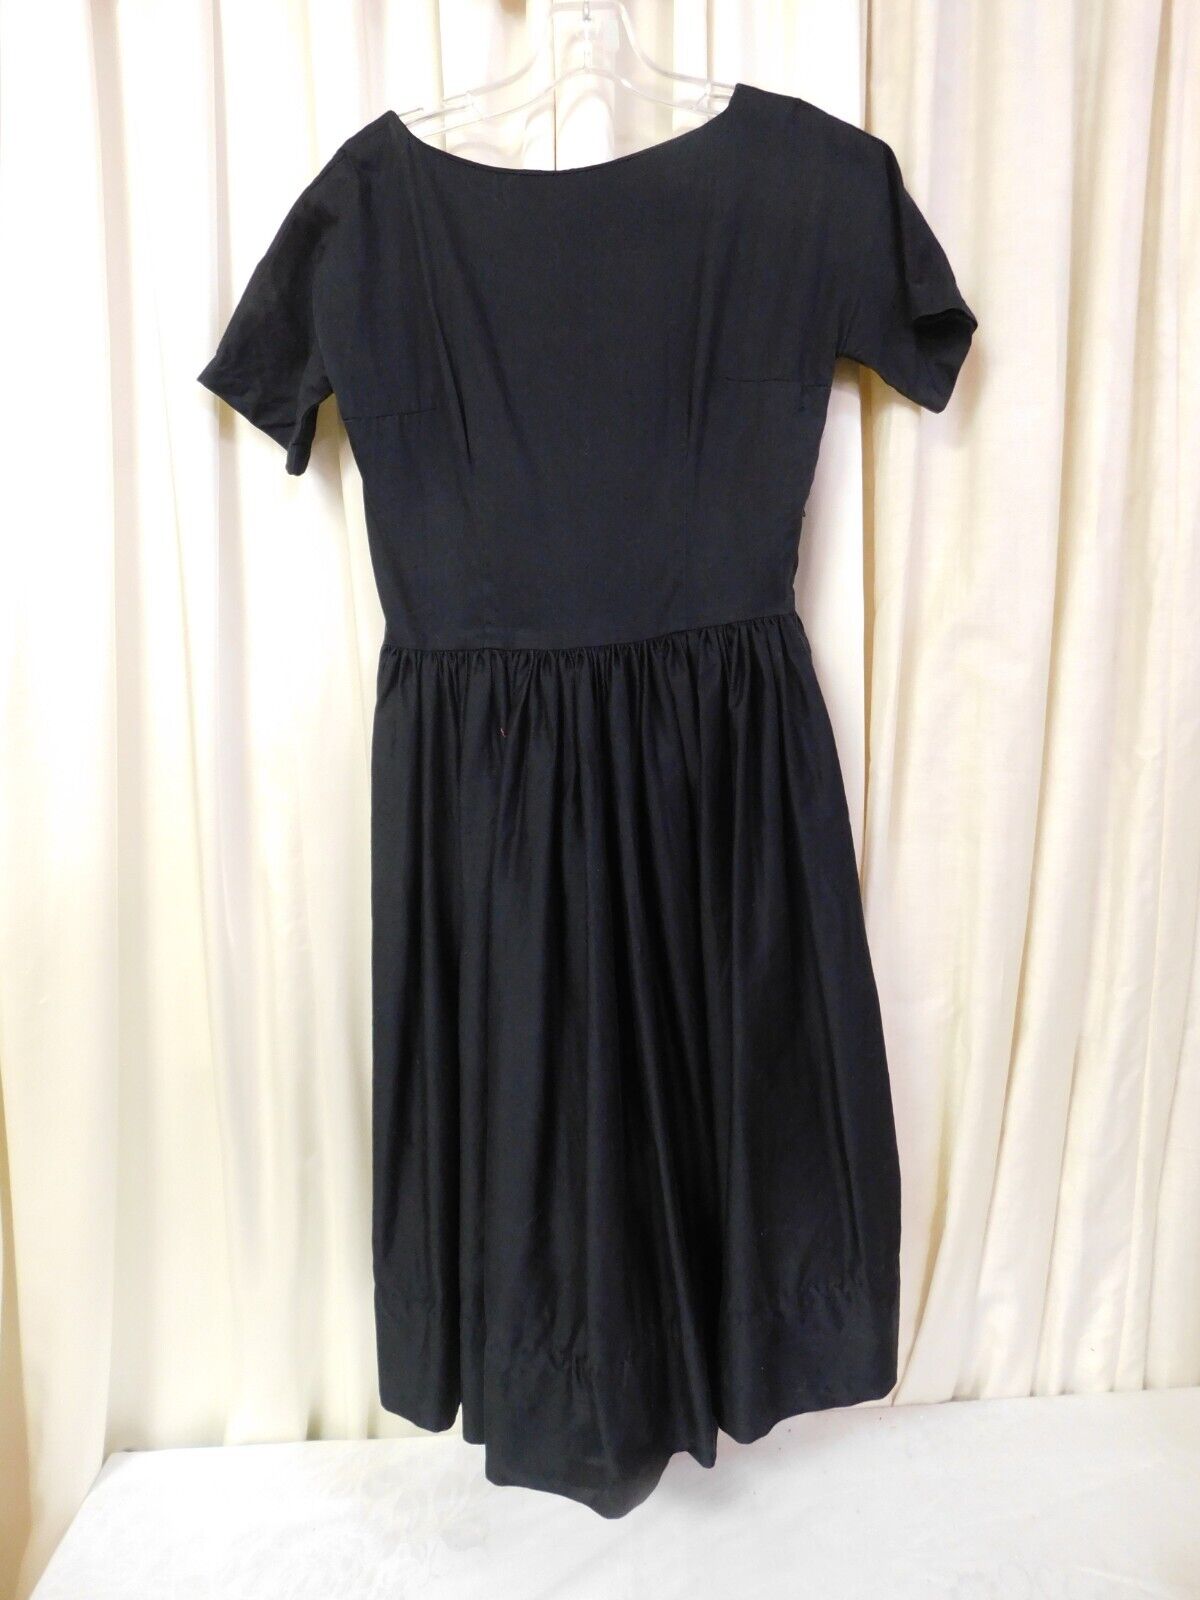 Vintage 1950's Black Cotton Day Dress Waist 26" - image 2